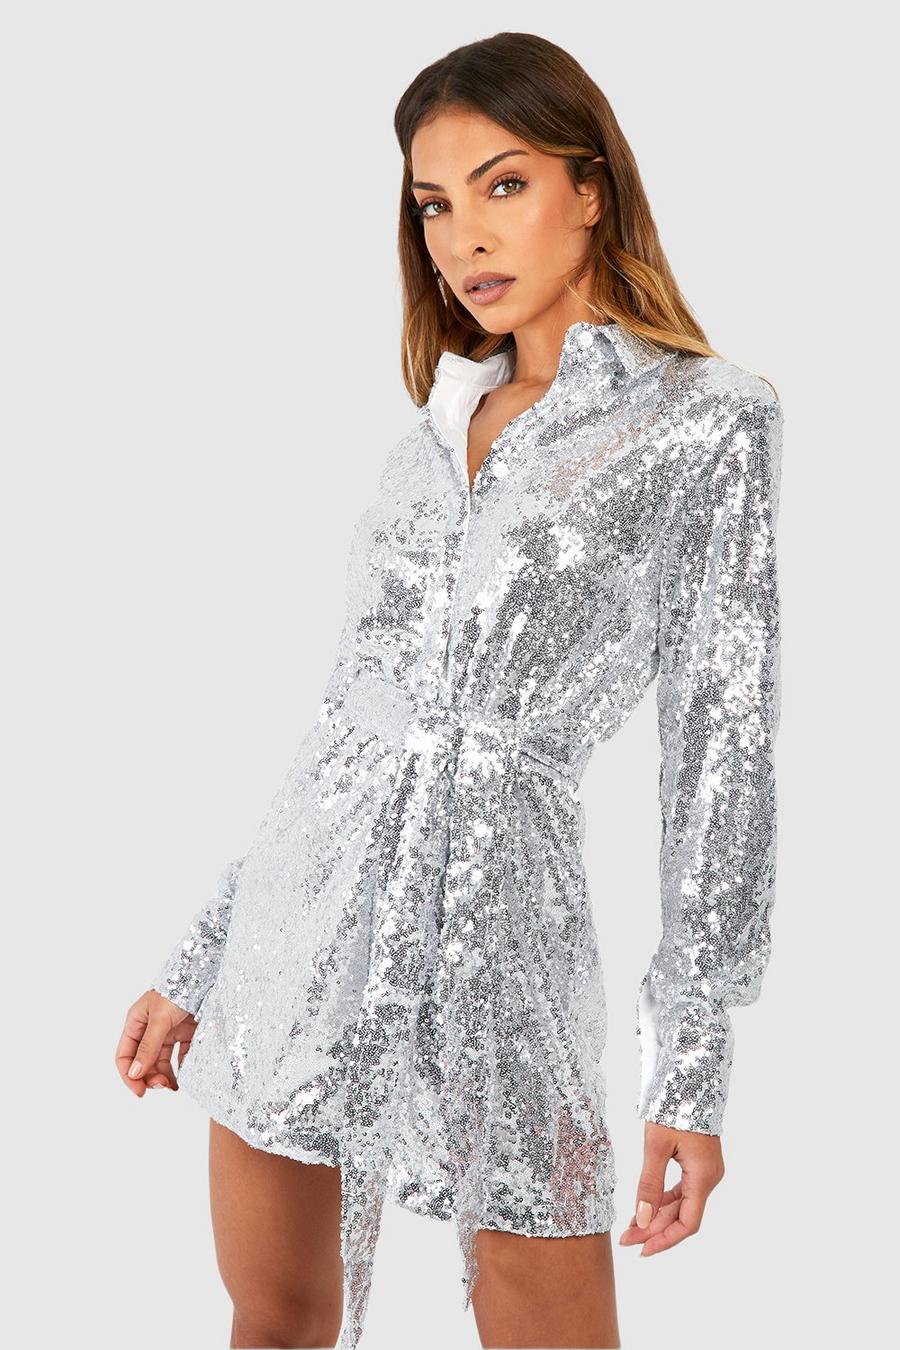 Silver Sequin Shirt Oversized Romper